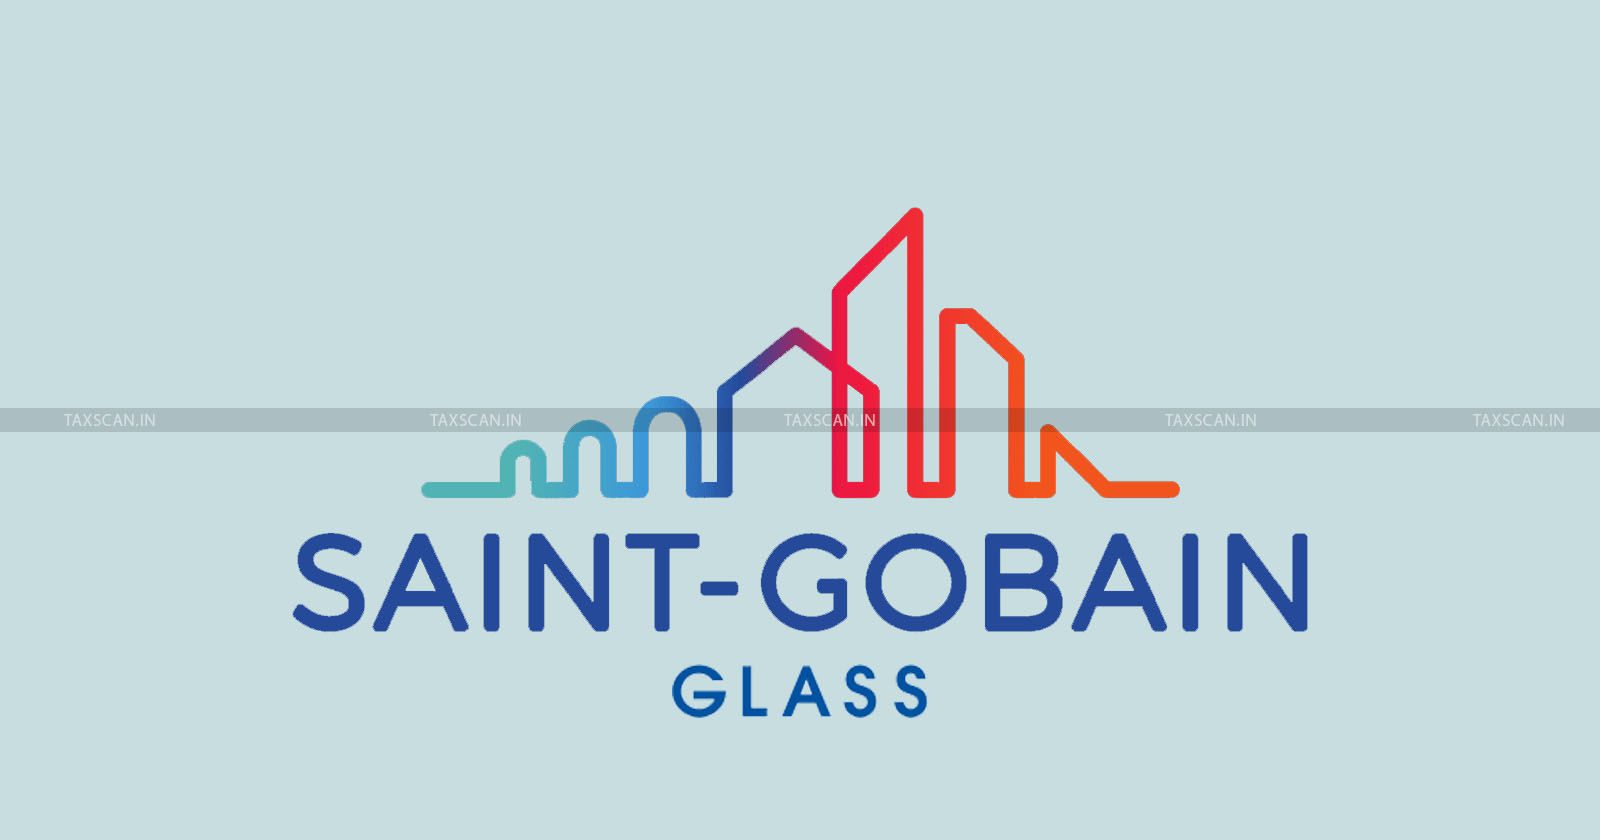 Relief - Saint- Gobain India Pvt. Ltd - ITAT - Excise refund - Interest subsidy - pursuance - incentive announces - sanctioned - capital receipt - taxscan